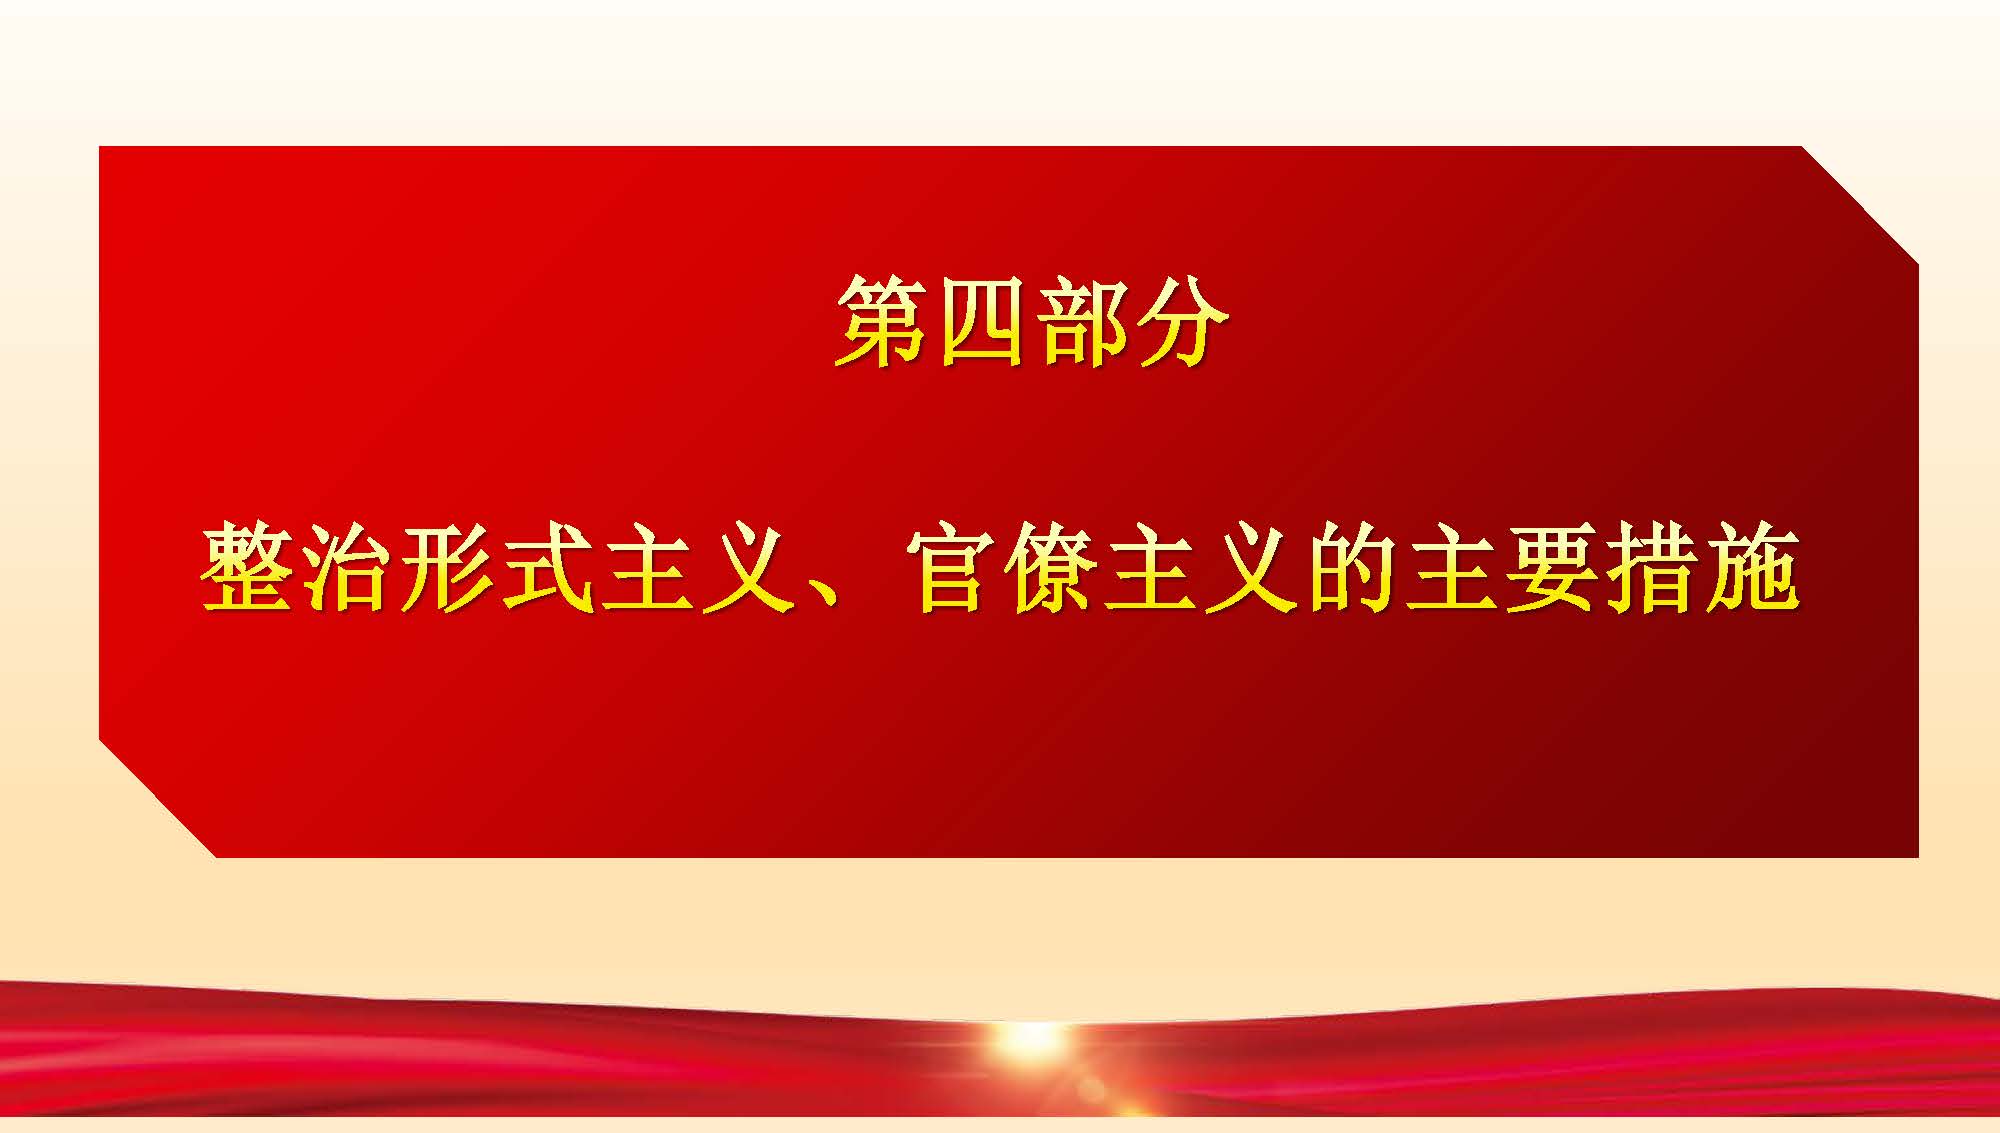 [PPT]中国水利水电第十四工程局有限公司华南事业部《作风建设永远在路上》